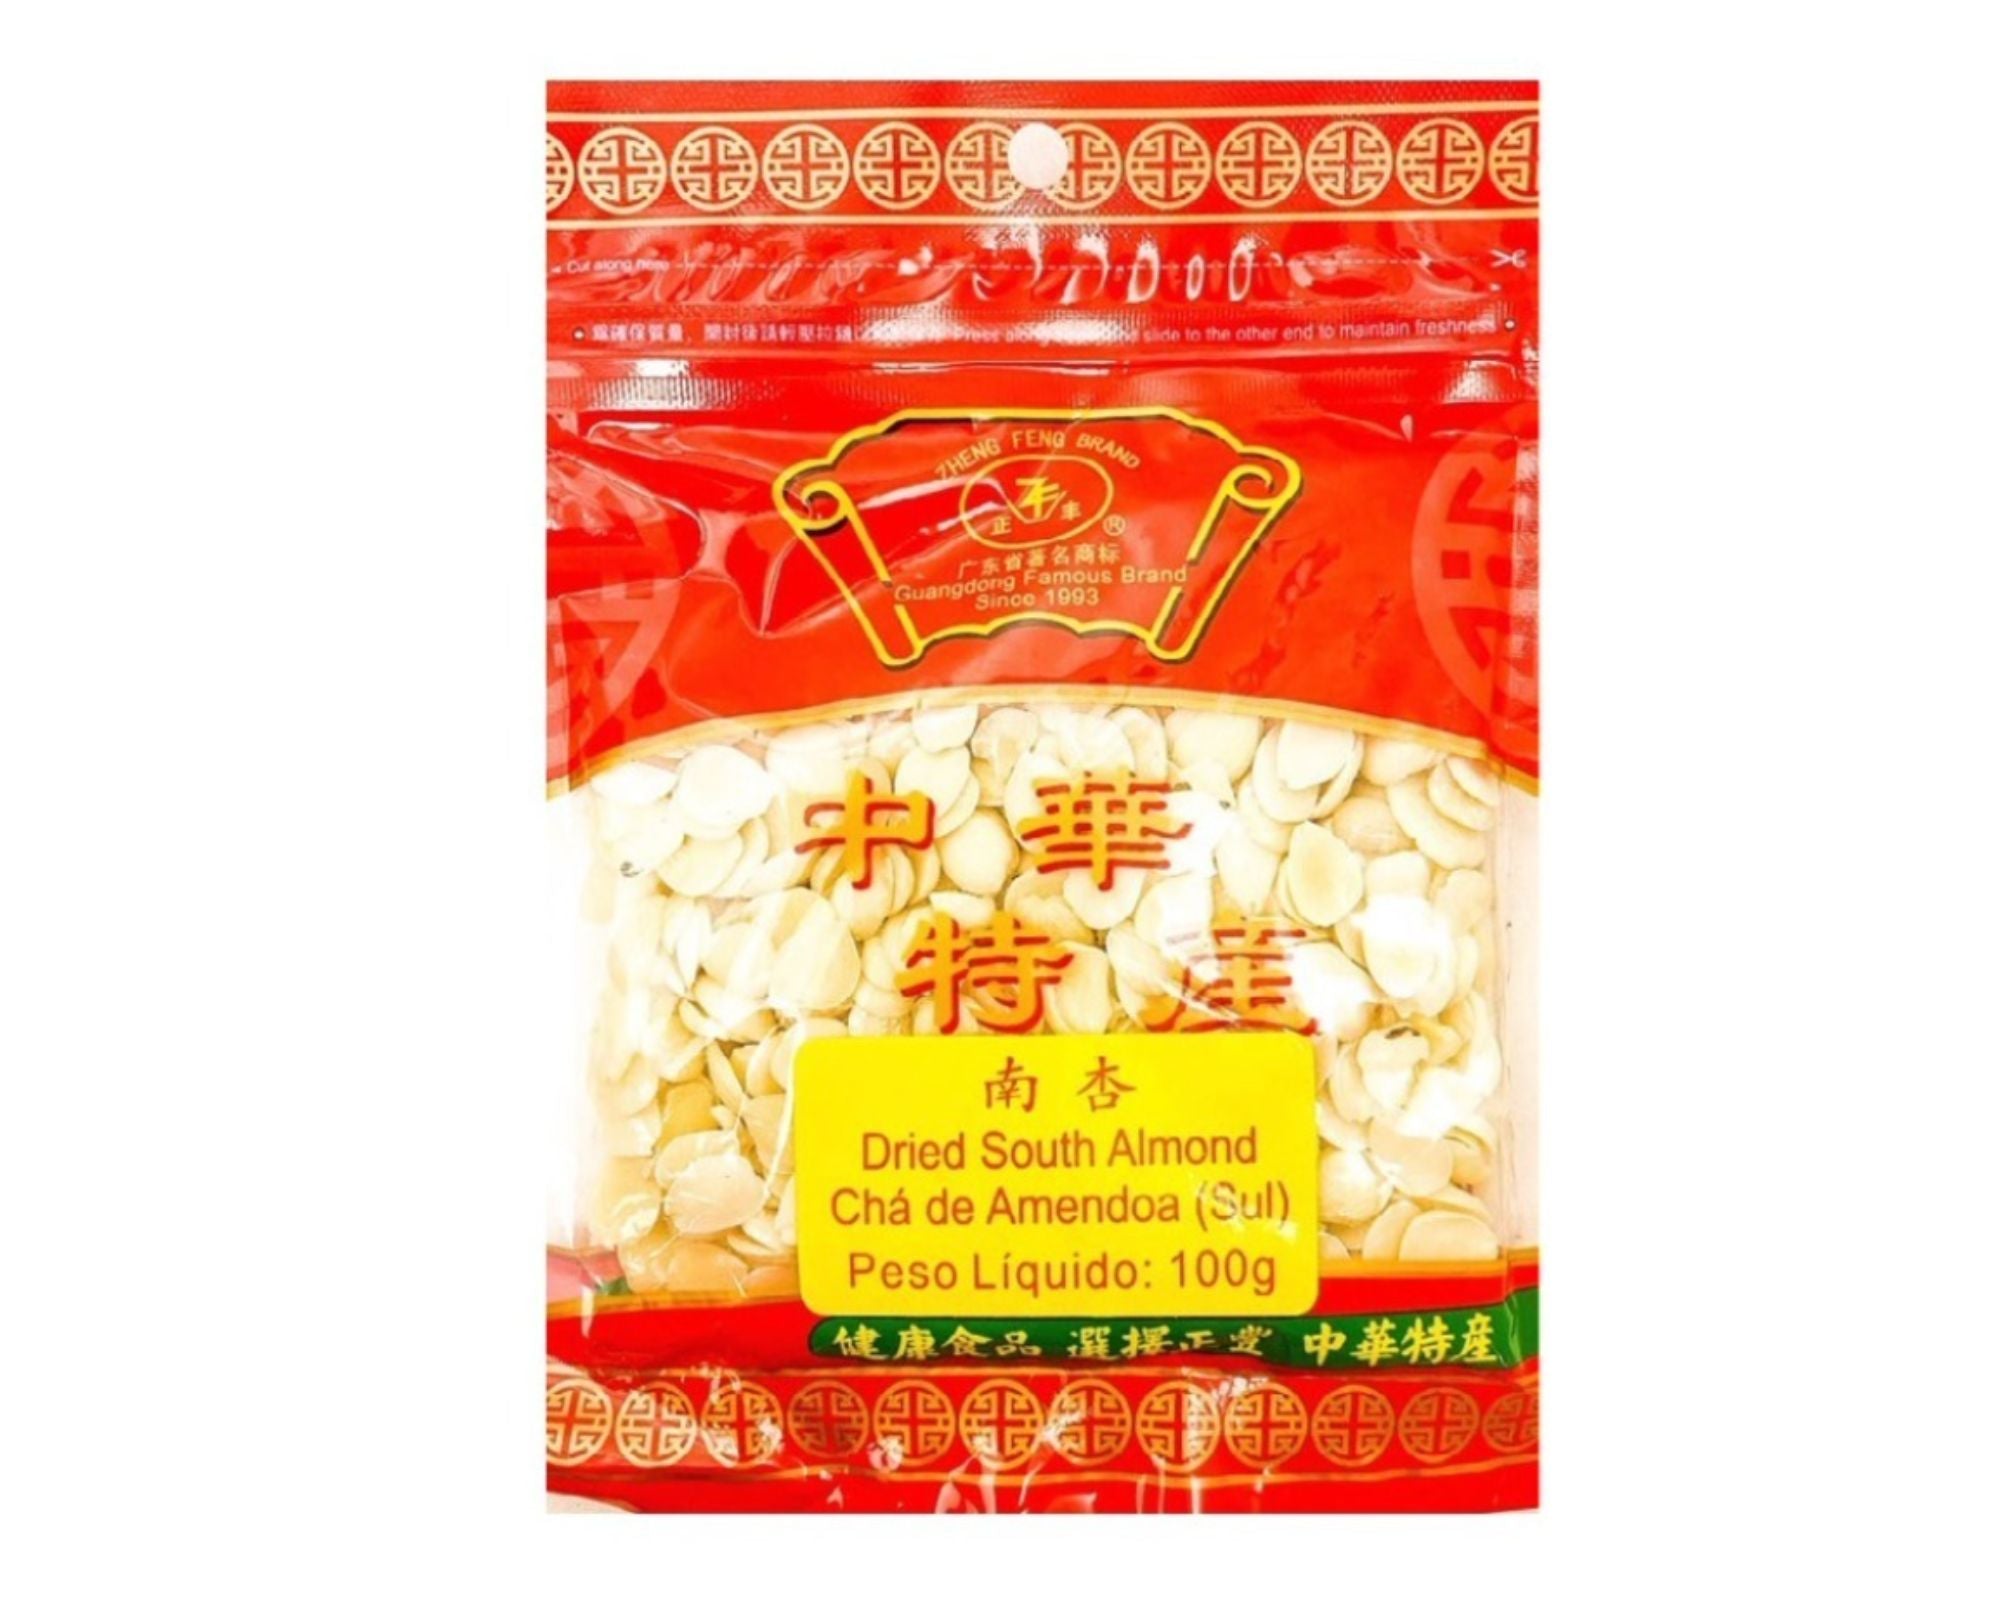 Chá De Amêndoa Sul (Dried South Almond) Zheng Feng Brand 100g